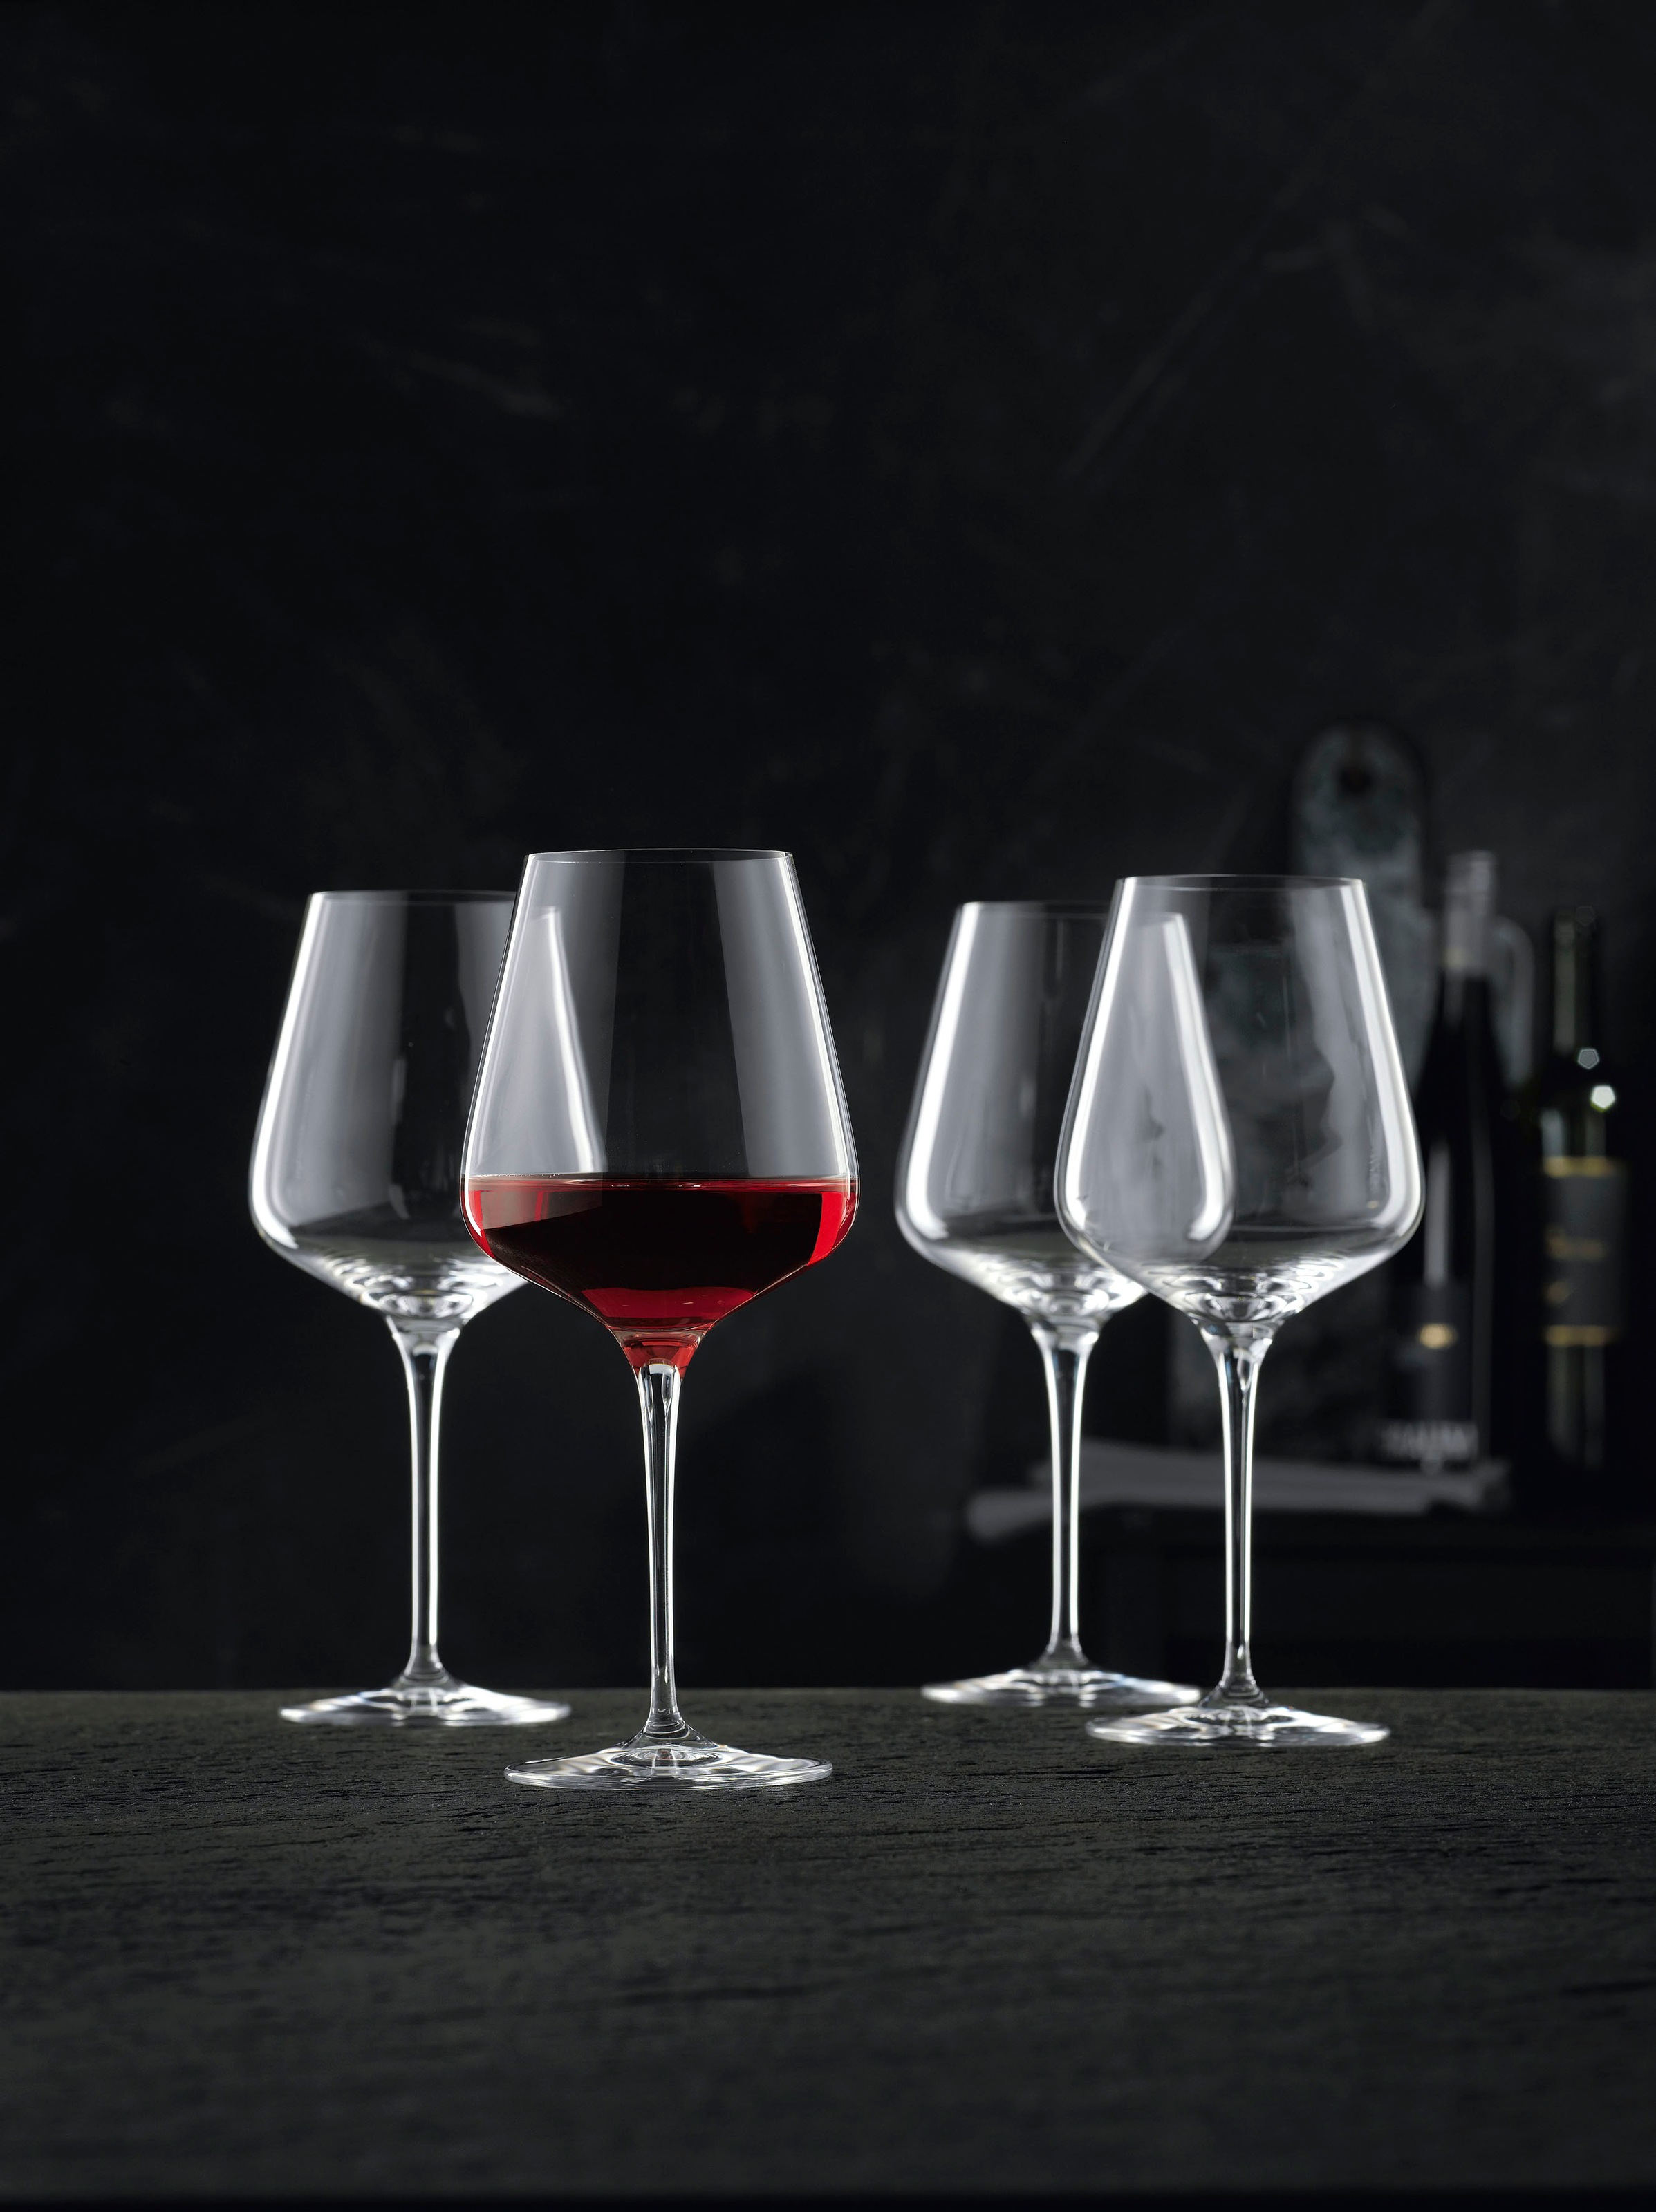 Nachtmann Rotweinglas »ViNova«, (Set, 4 tlg., Set bestehend aus 4 Gläsern), 680 ml, 4-teilig, Made in Germany